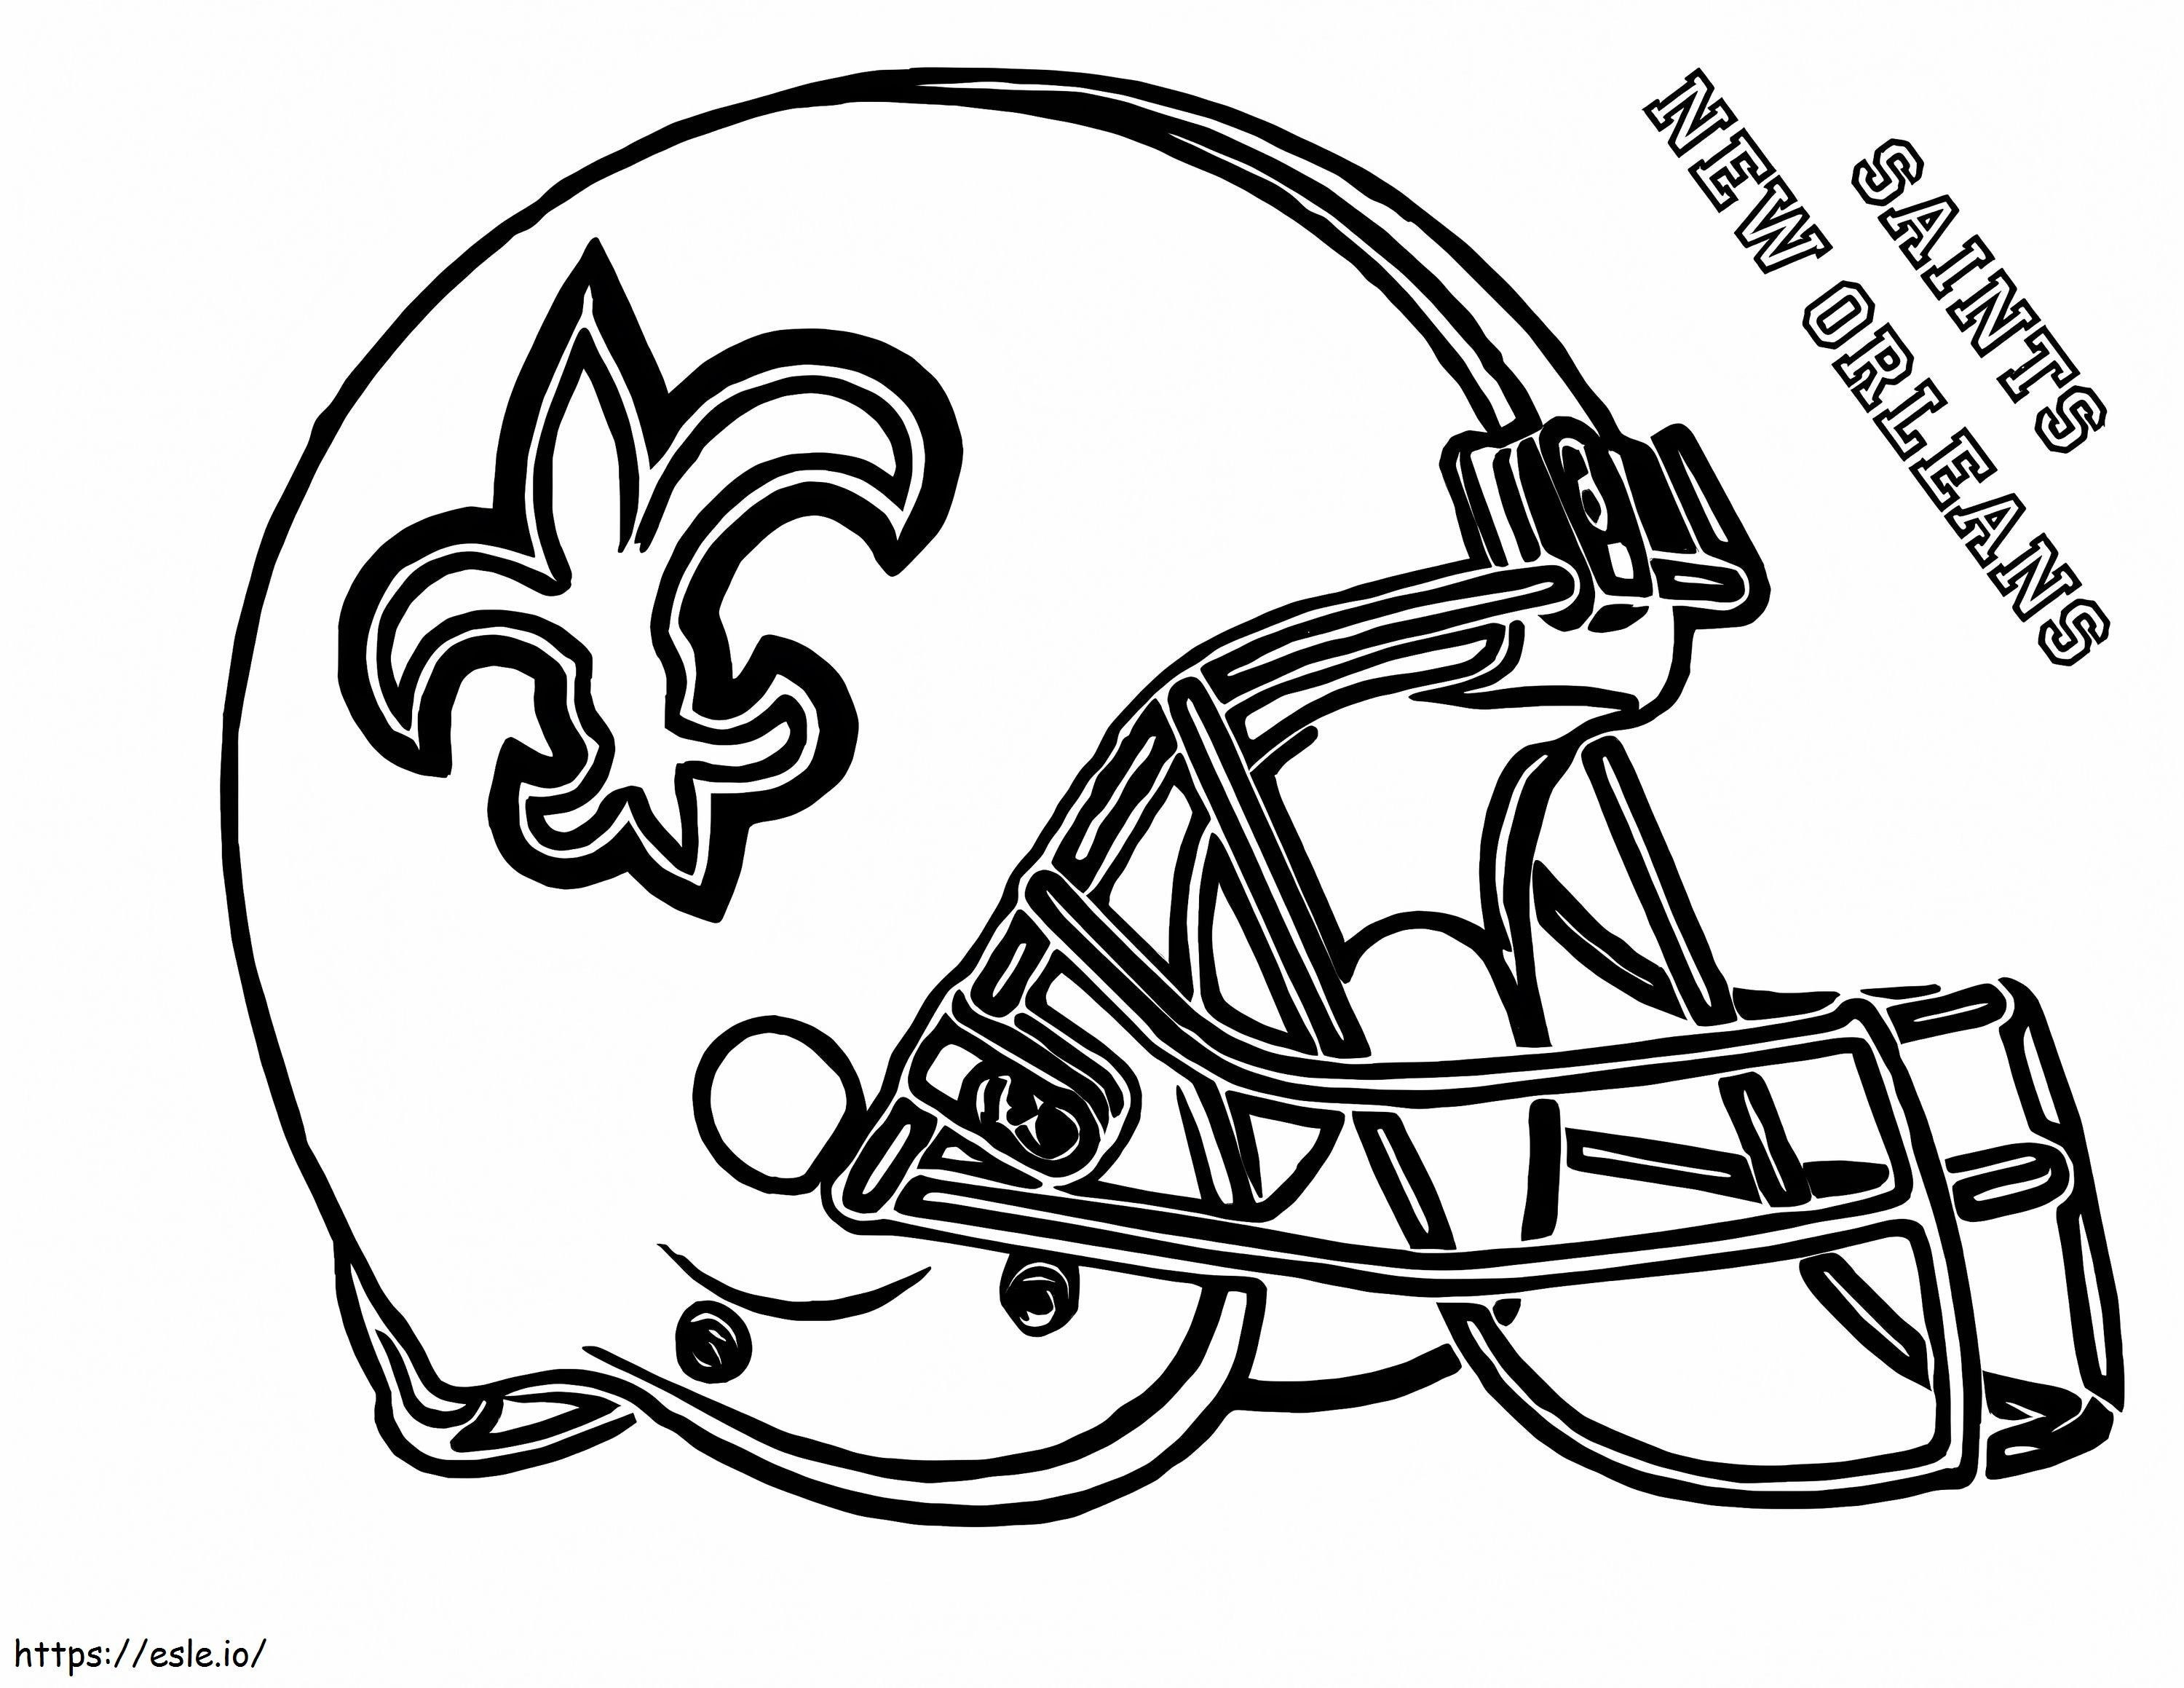 Saints New Orleans coloring page